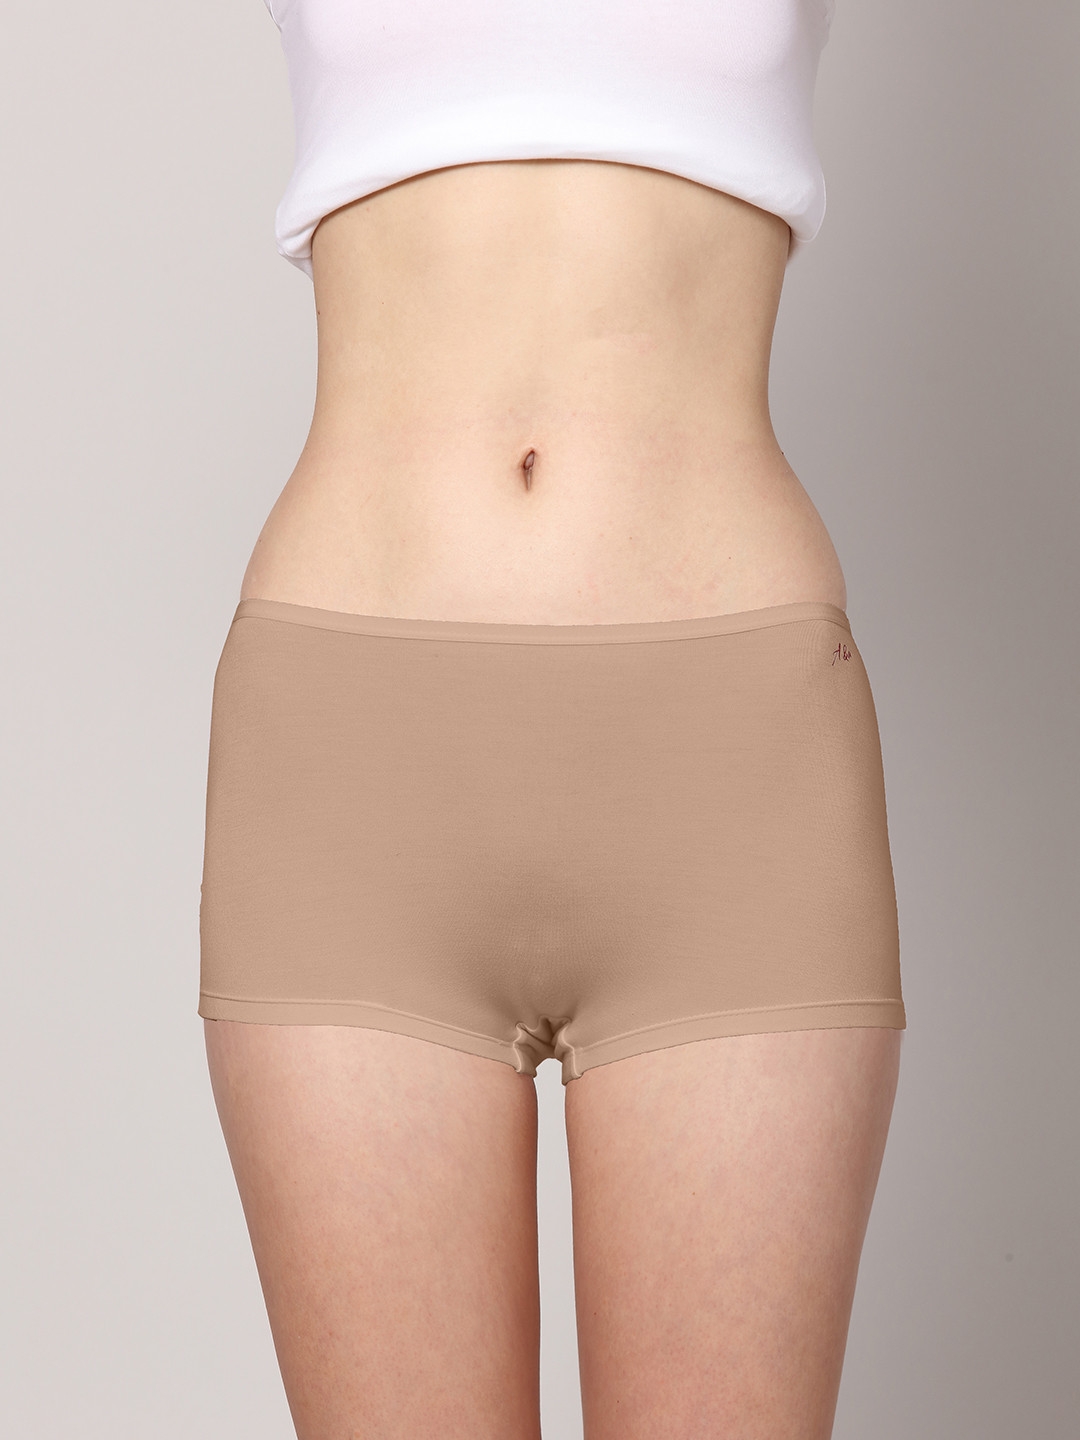 AshleyandAlvis | AshleyandAlvis Women's Panties Micro Modal, Anti Bacterial, Skinny Soft, Premium Boyshorts -No Itching, Sweat Proof, Double In-seam Gusset 1